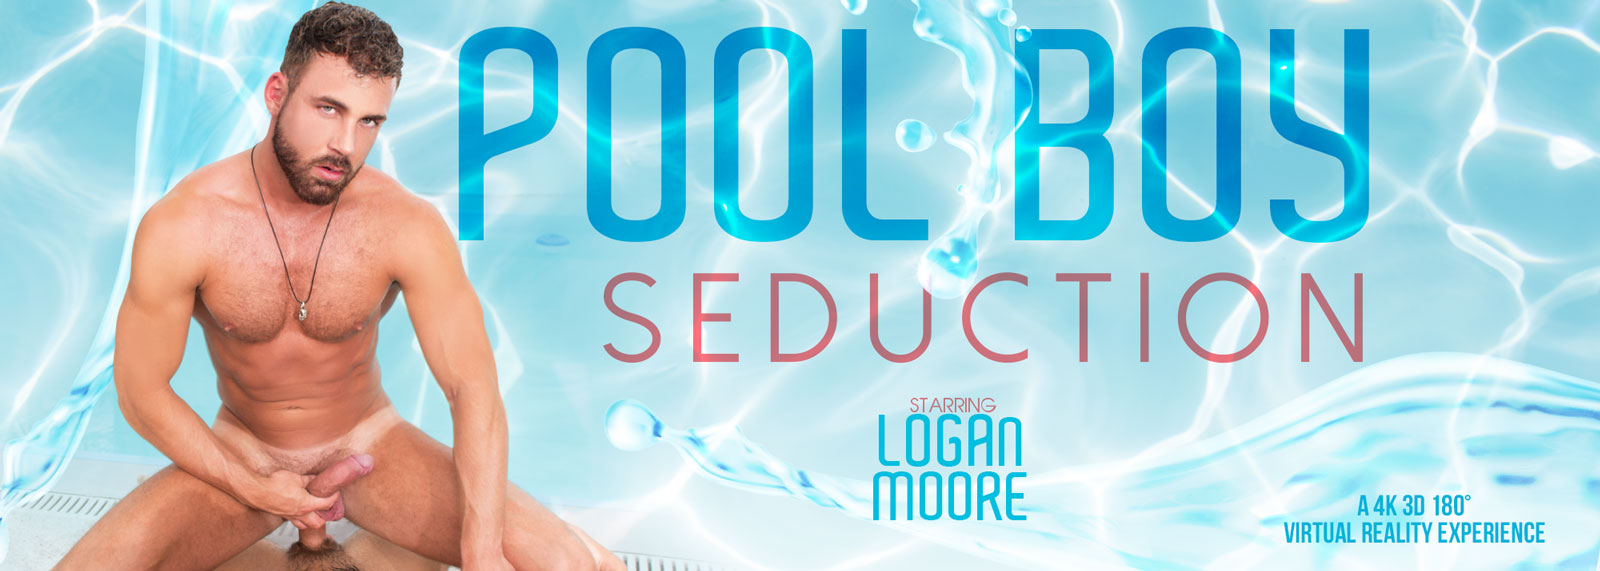 Pool Boy Seduction - VR Porn Video, Starring: Logan Moore VR